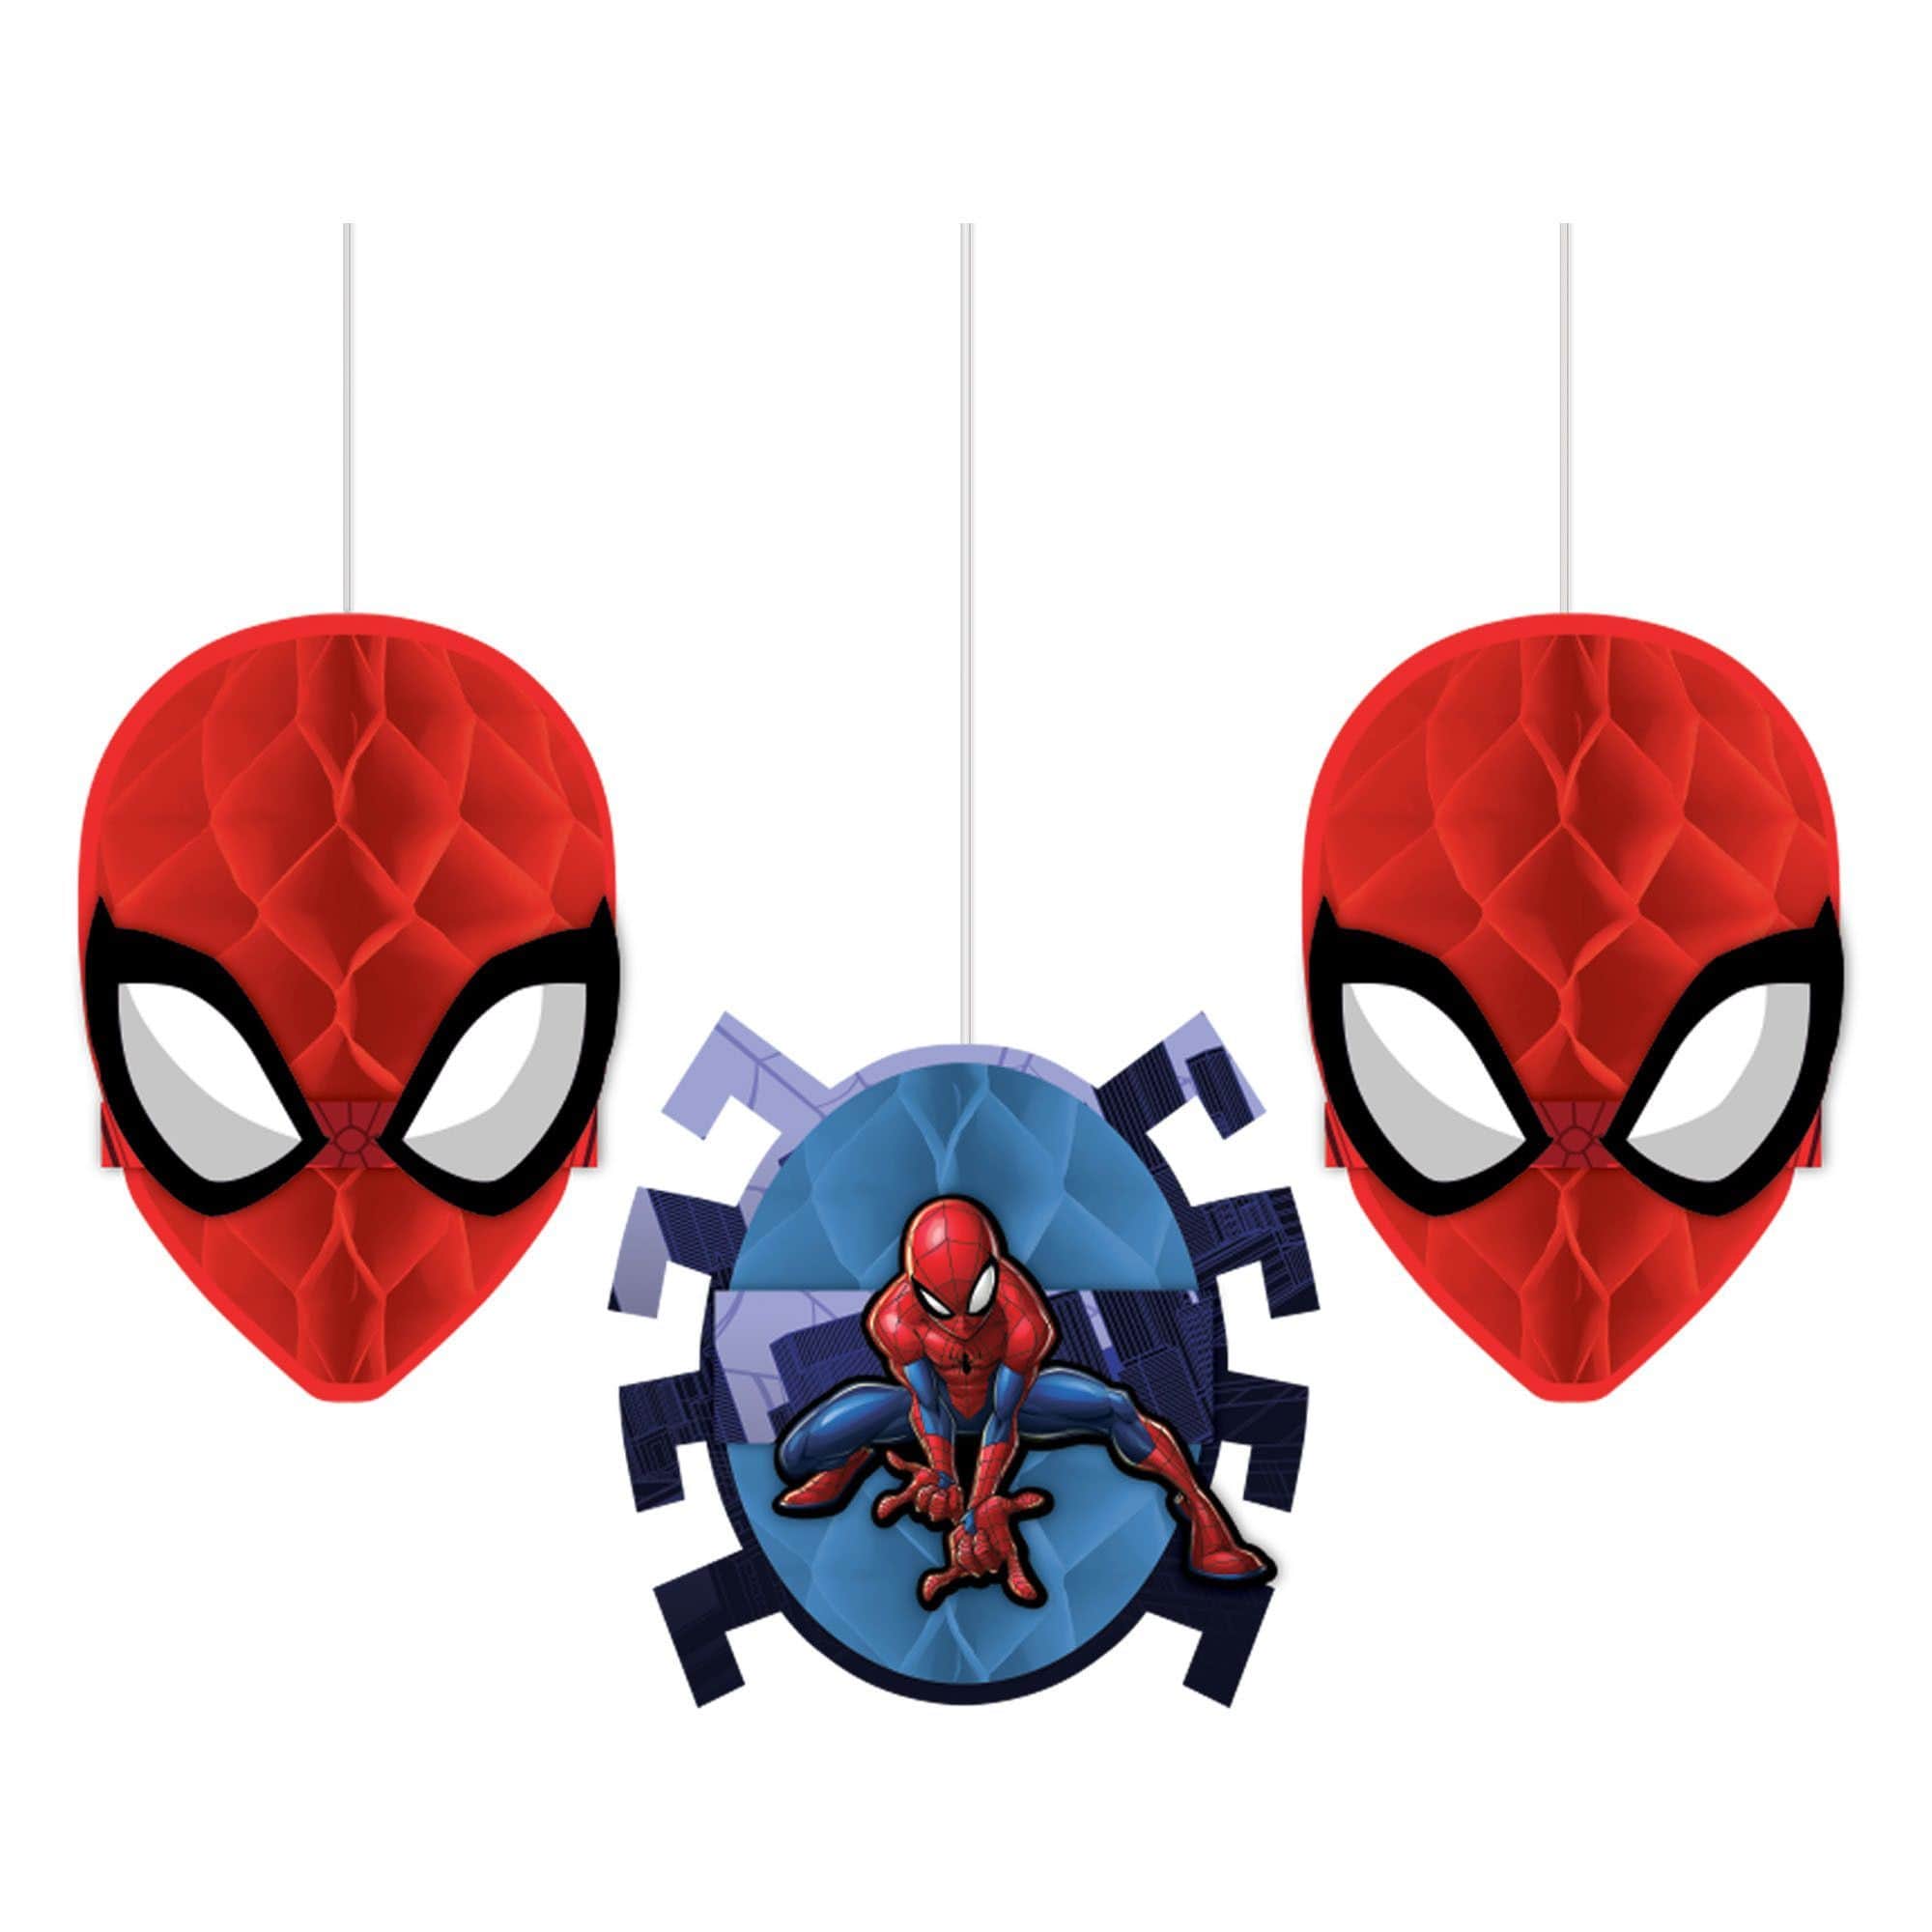 Spiderman Pinata, Spiderman Theme party, Amazing Spiderman Piñata